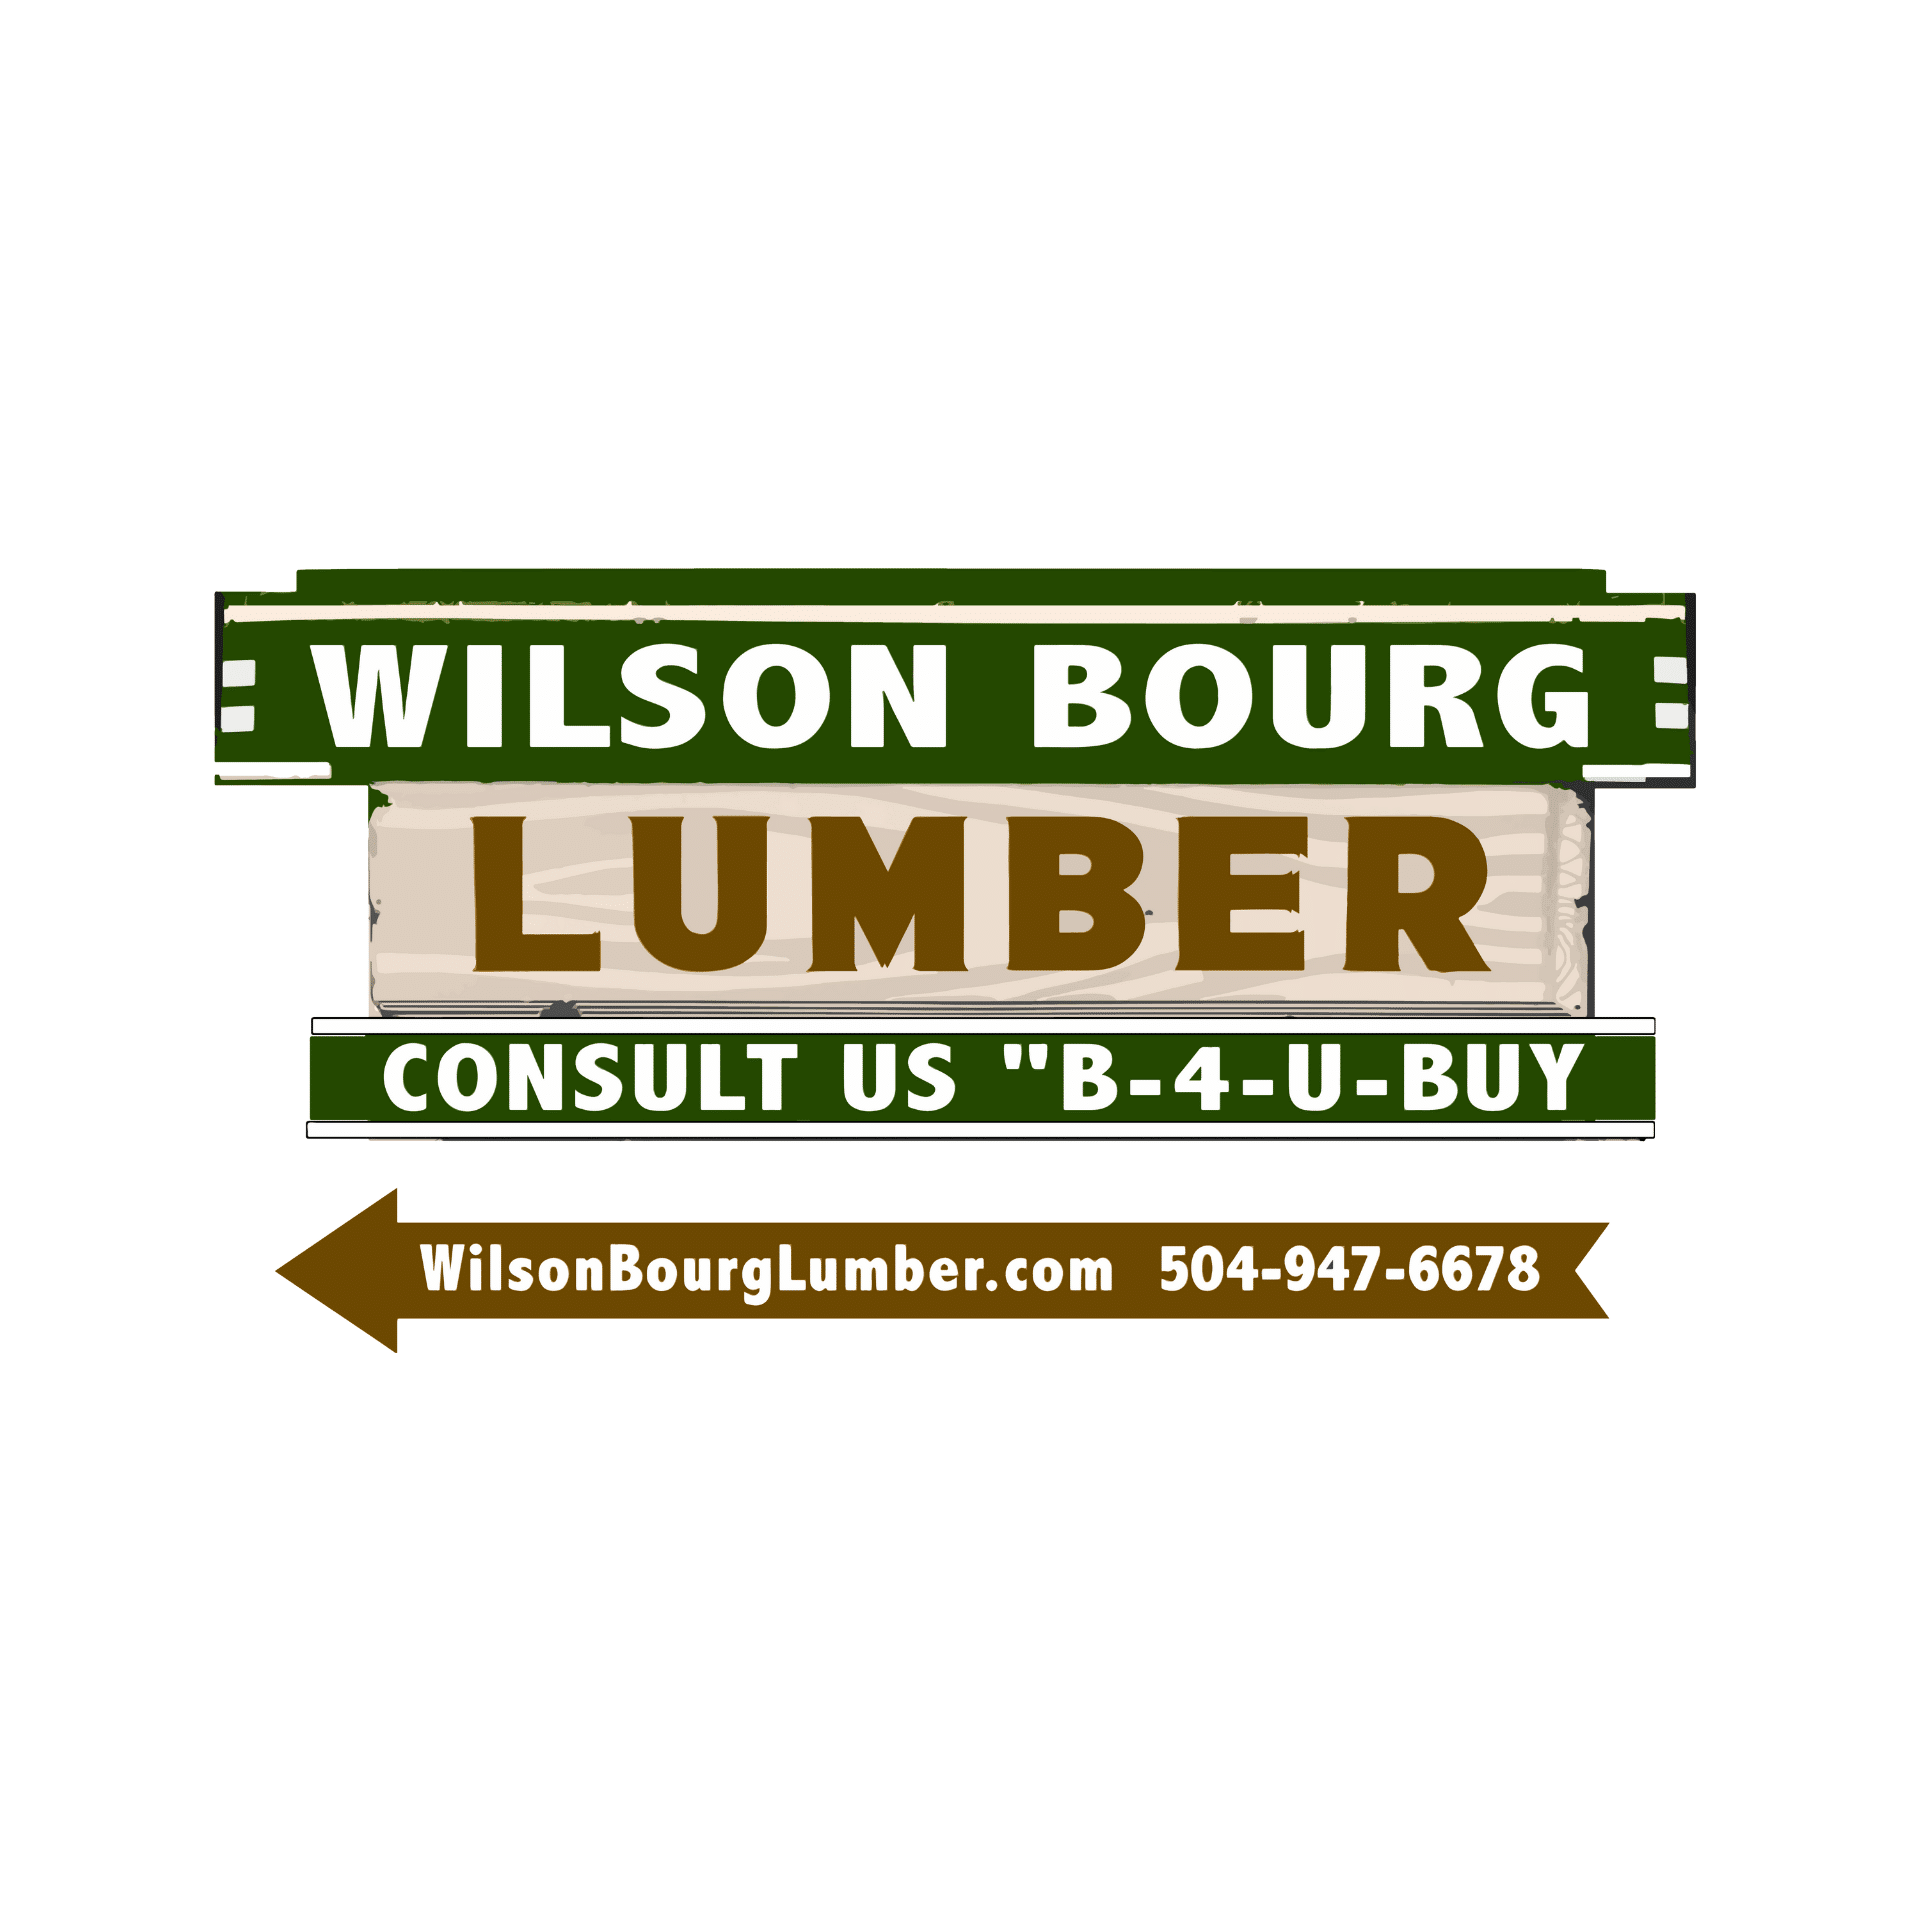 Web Design for Wilson Bourg